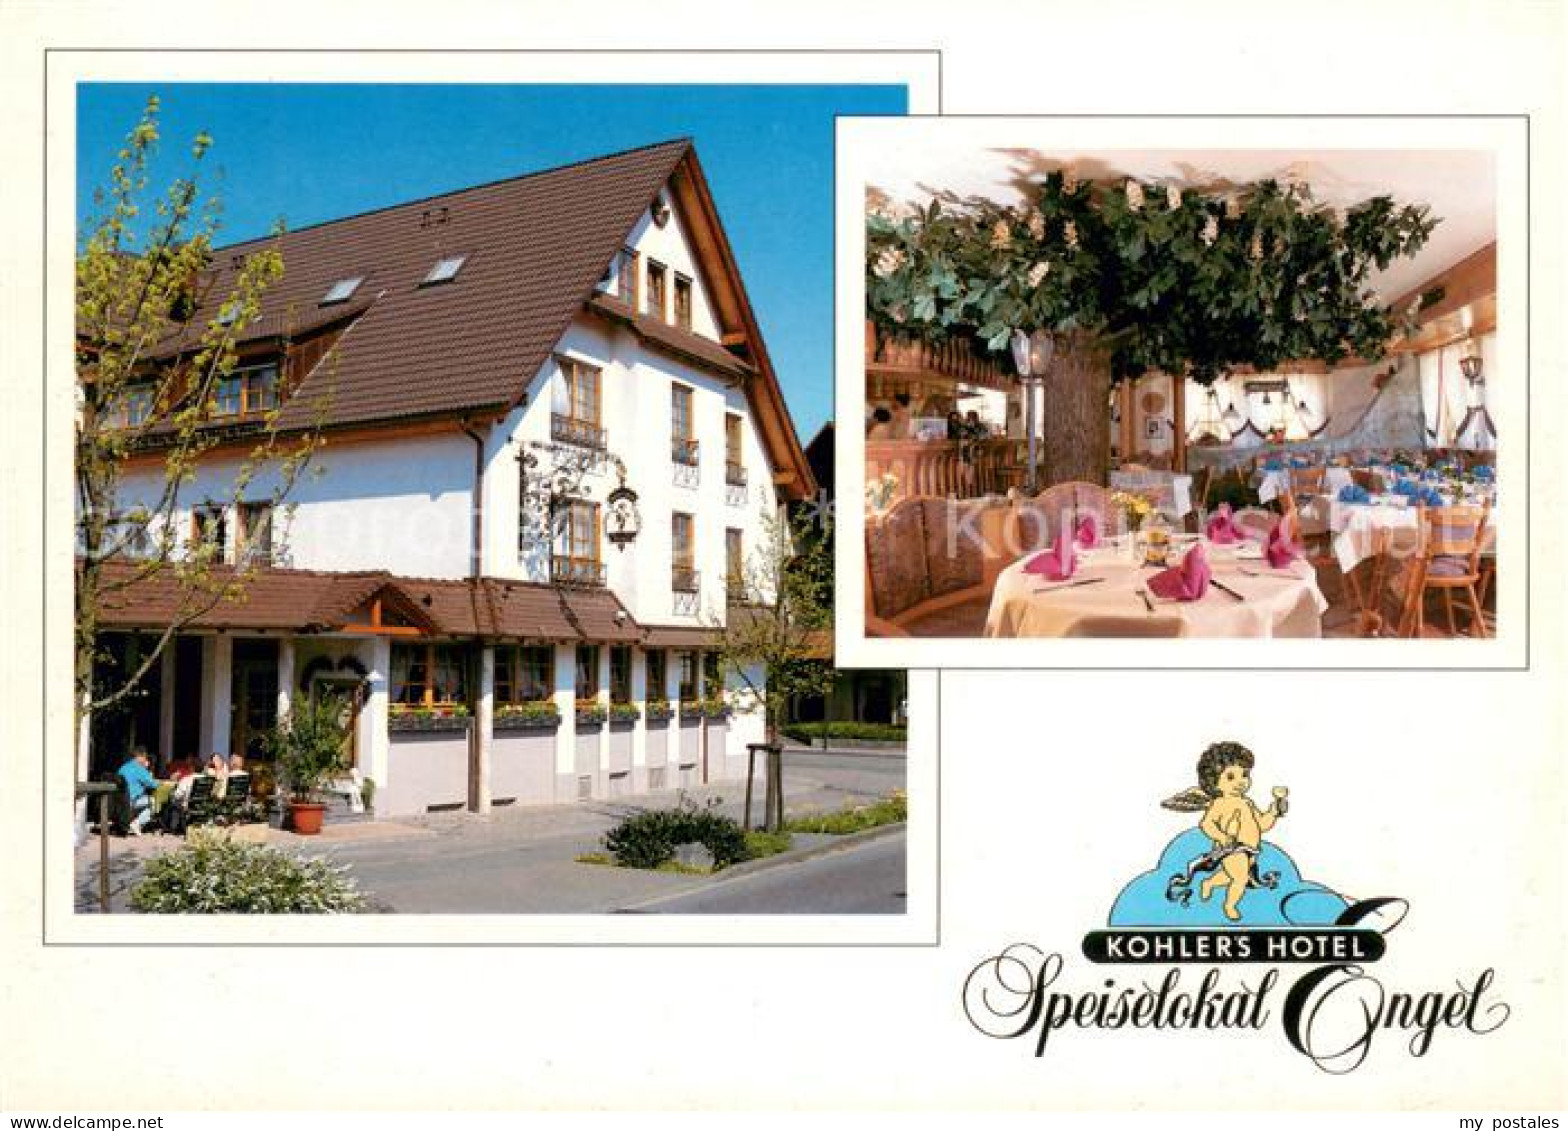 73644275 Vimbuch Speiselokal Engel Kohlers Hotel Vimbuch - Buehl